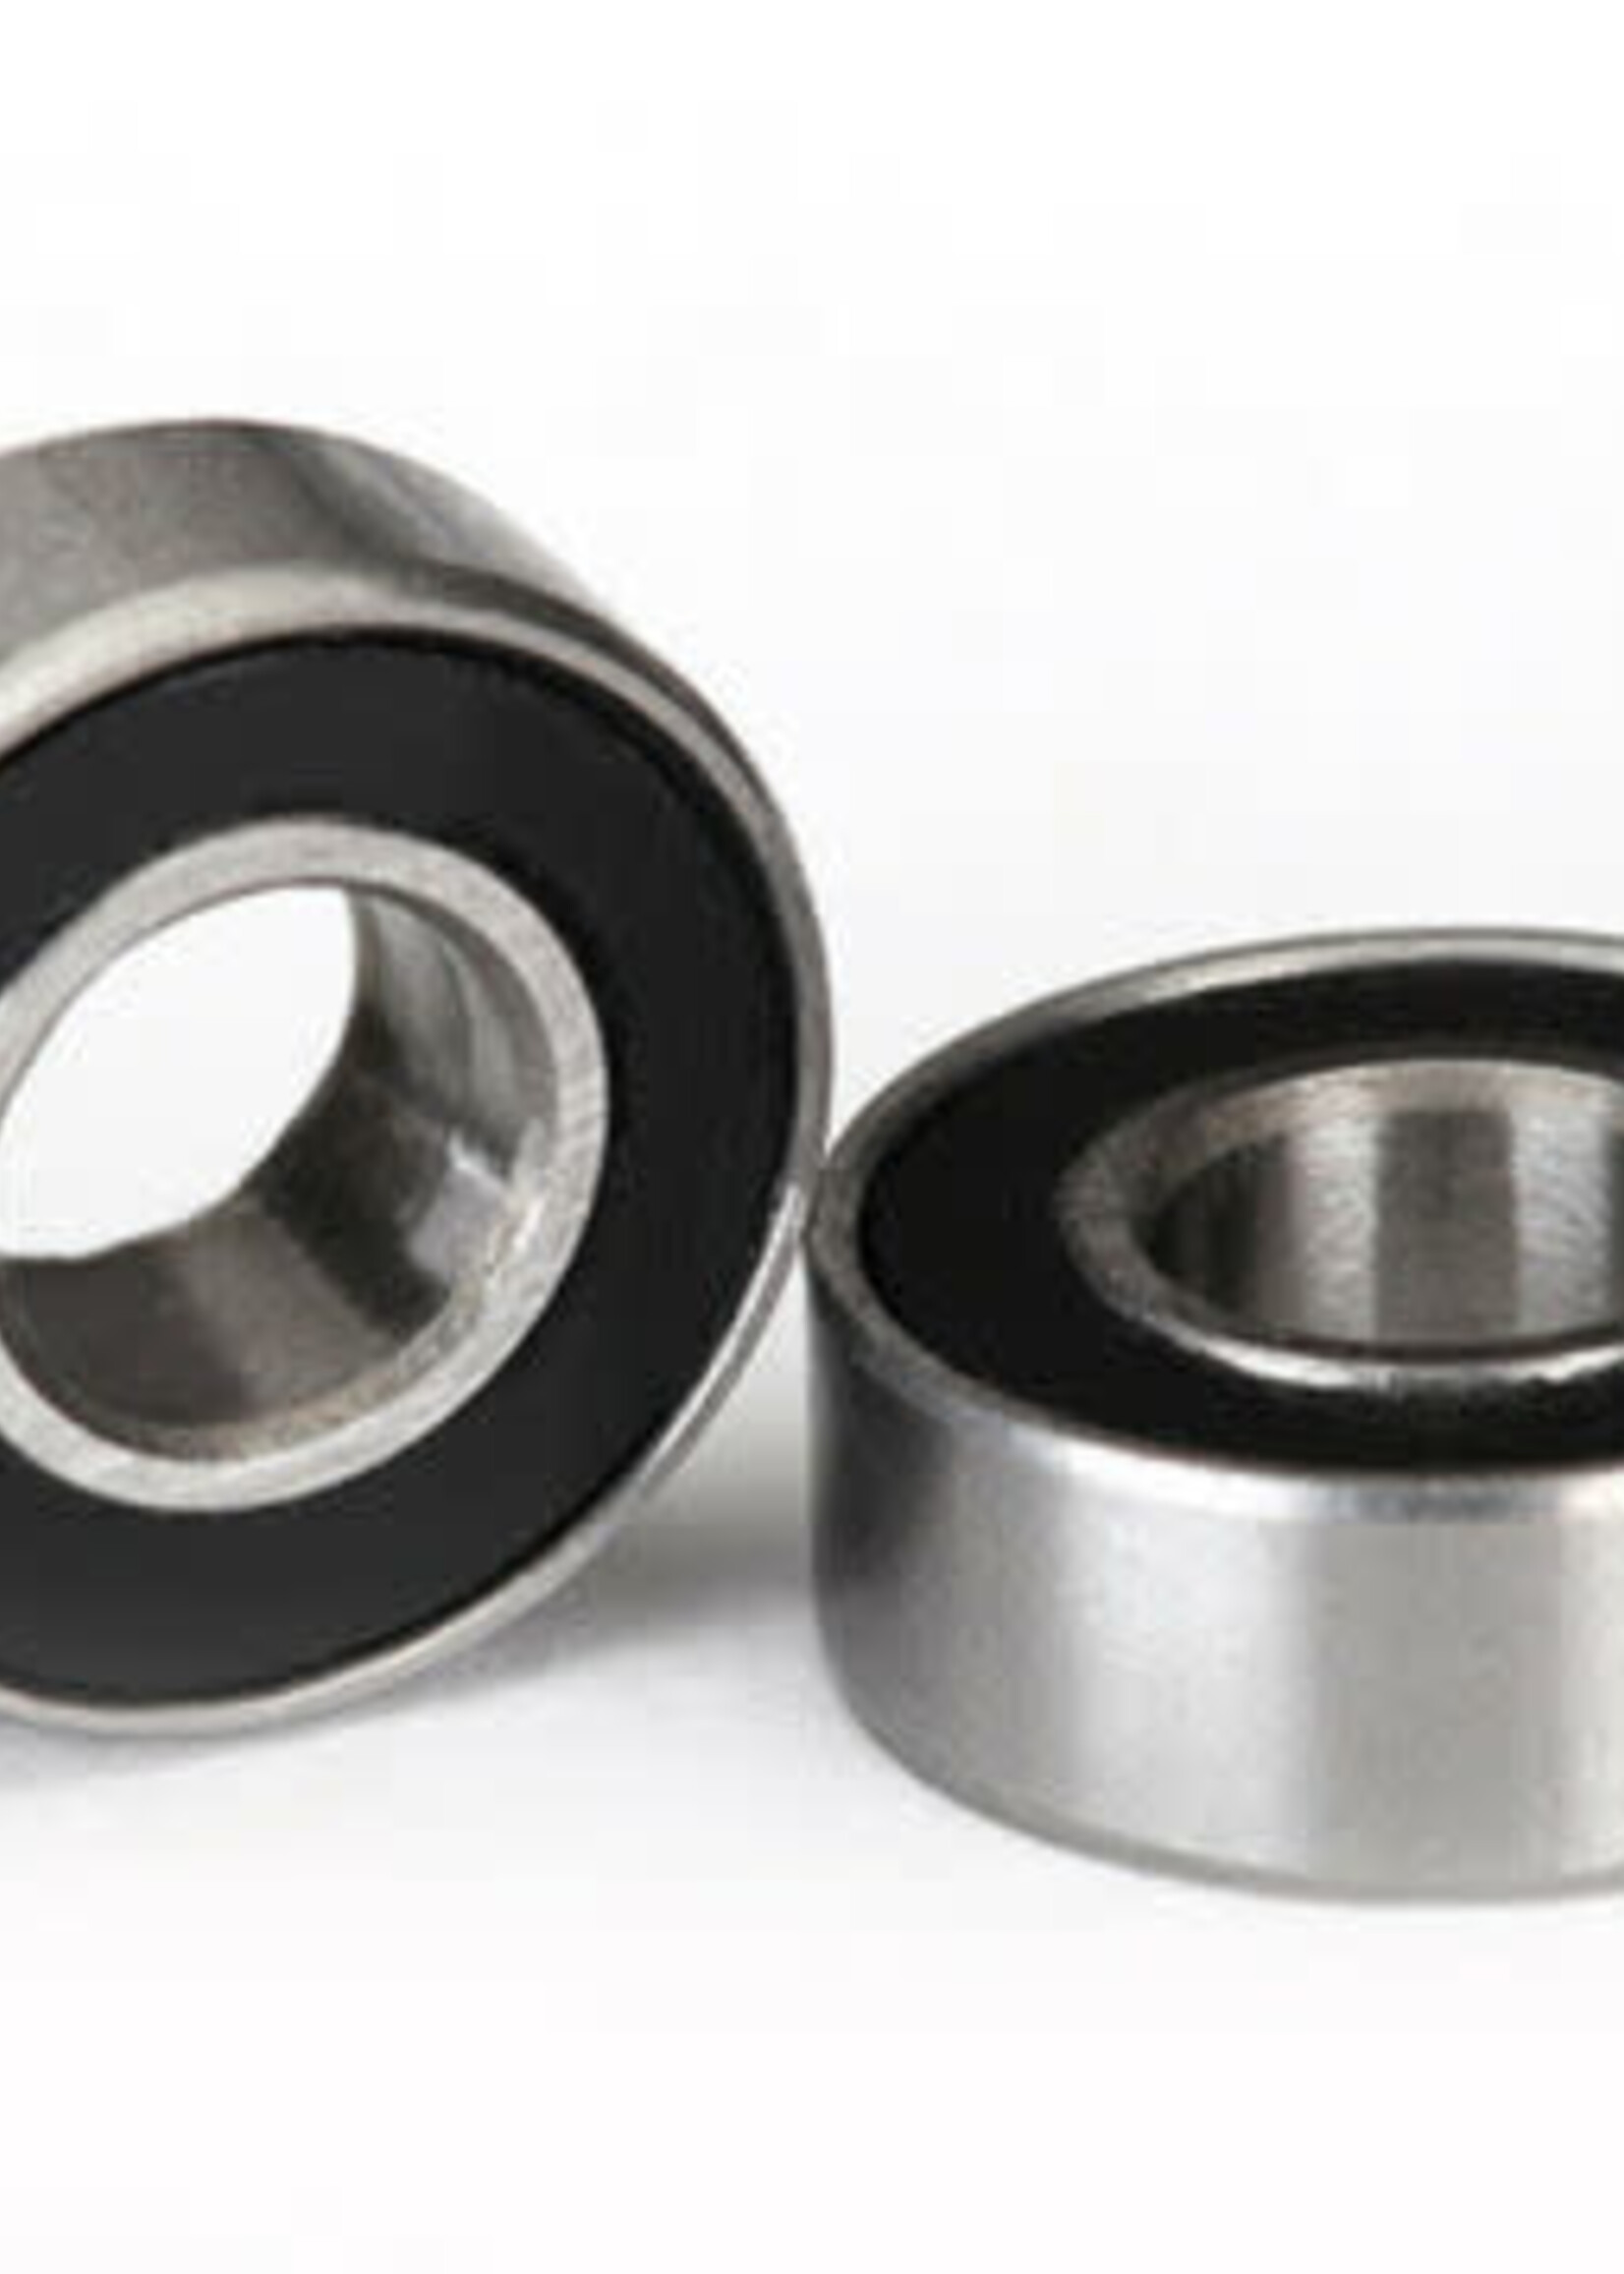 TRAXXAS Ball bearings, black rubber sealed (17x23x4mm) (2) 5098a